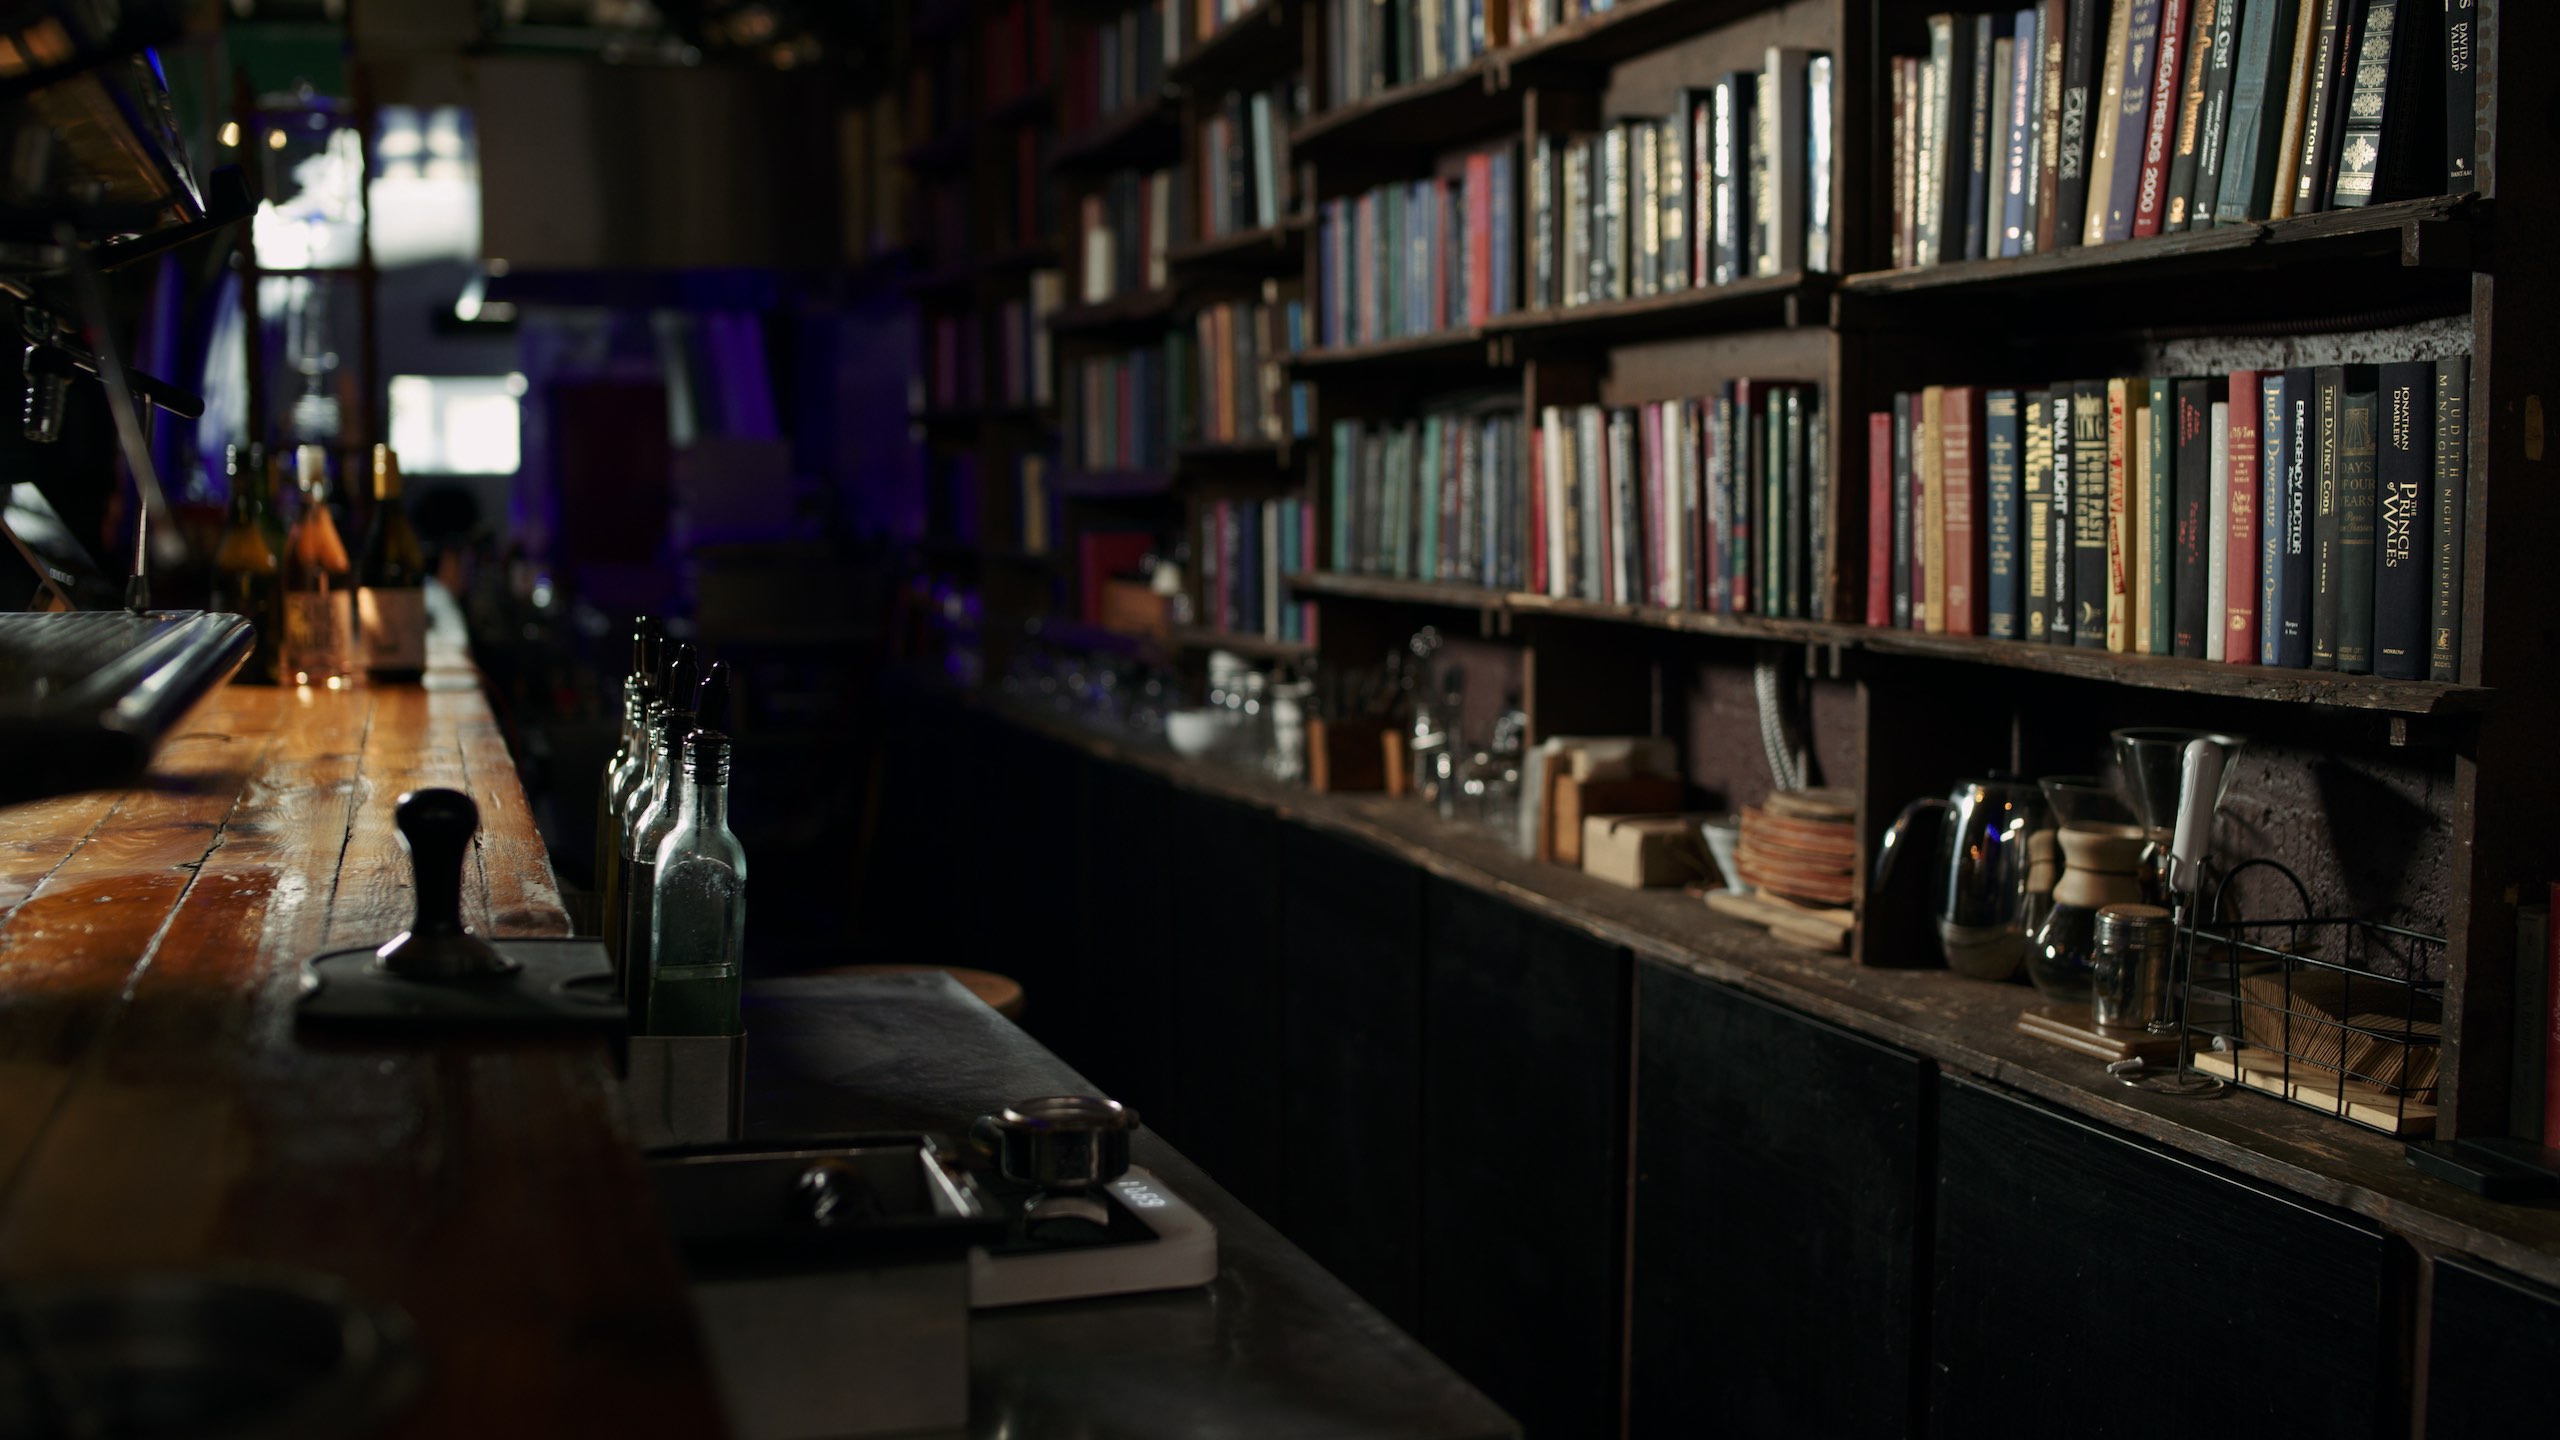 IU C&I Studios Portfolio Side profile of a bar with alcohol bottles and books on bookshelves